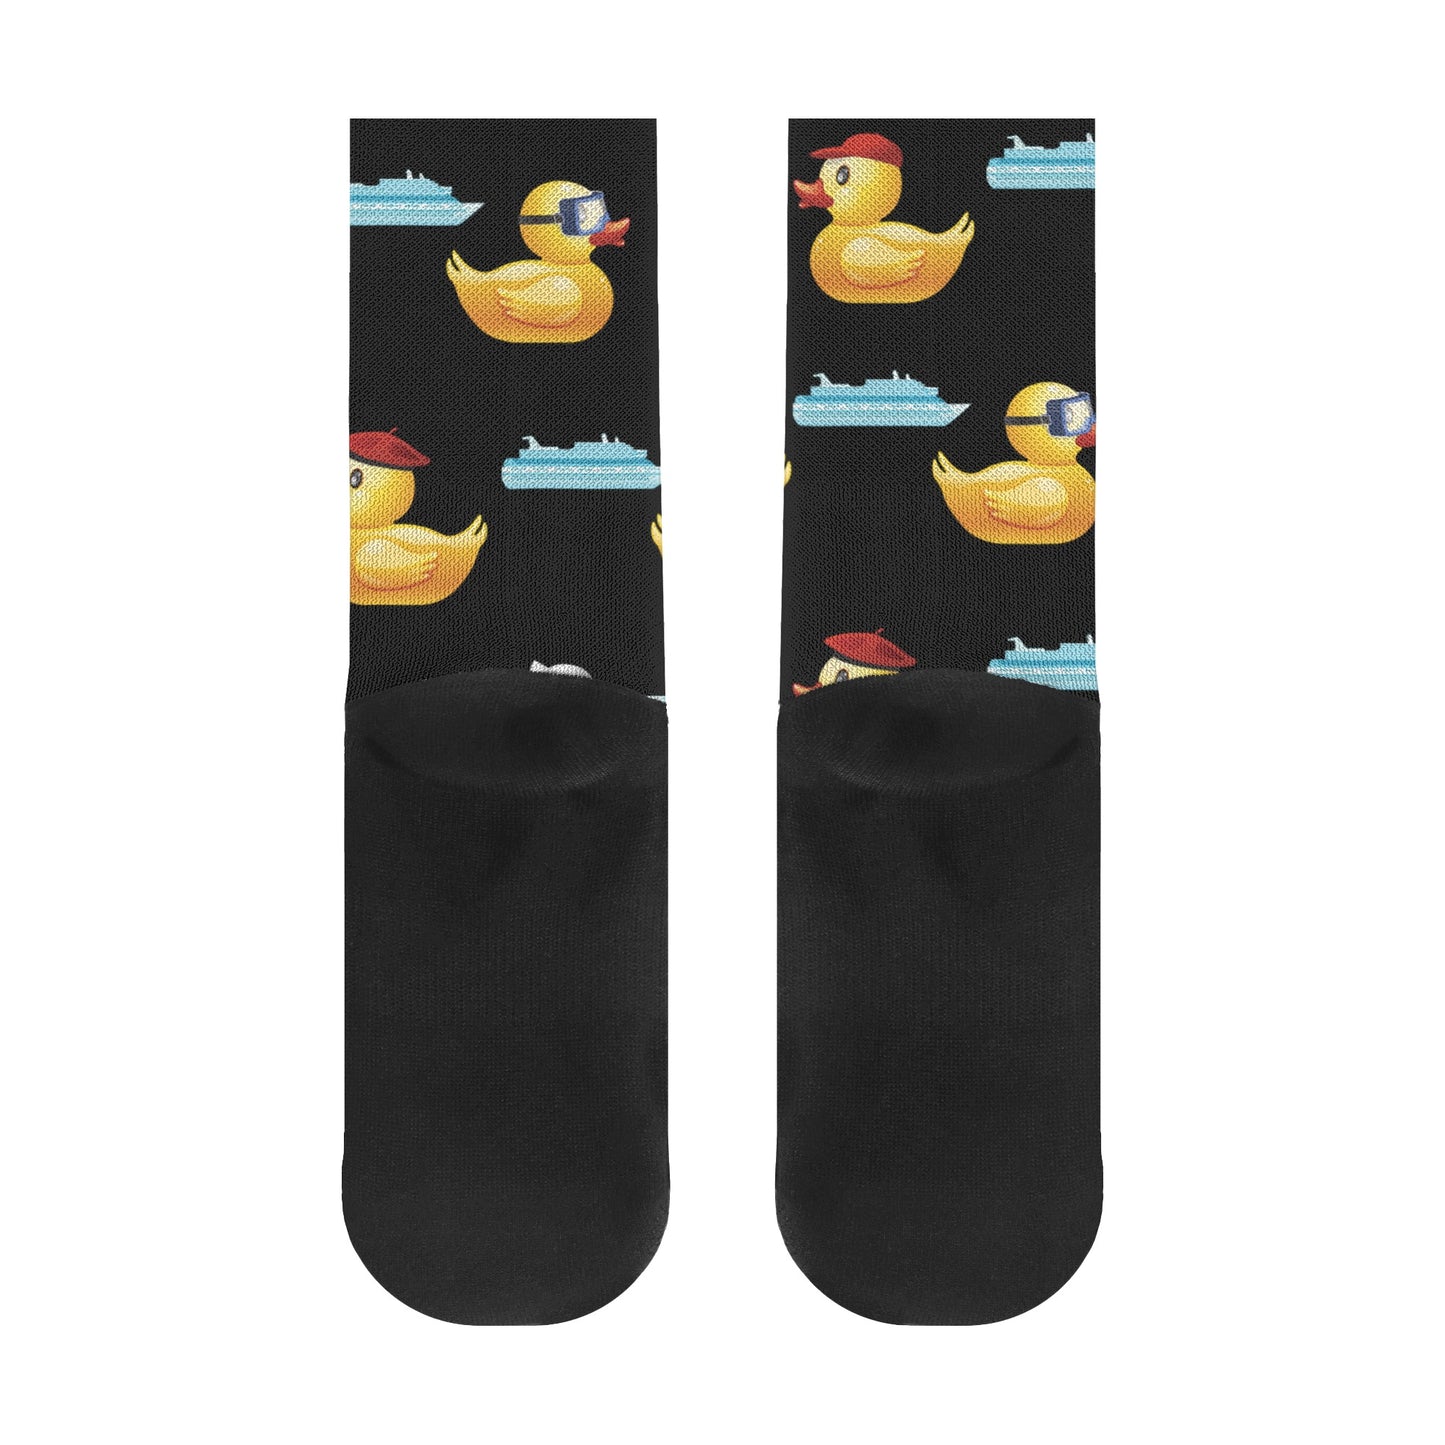 Ducky Crew Socks